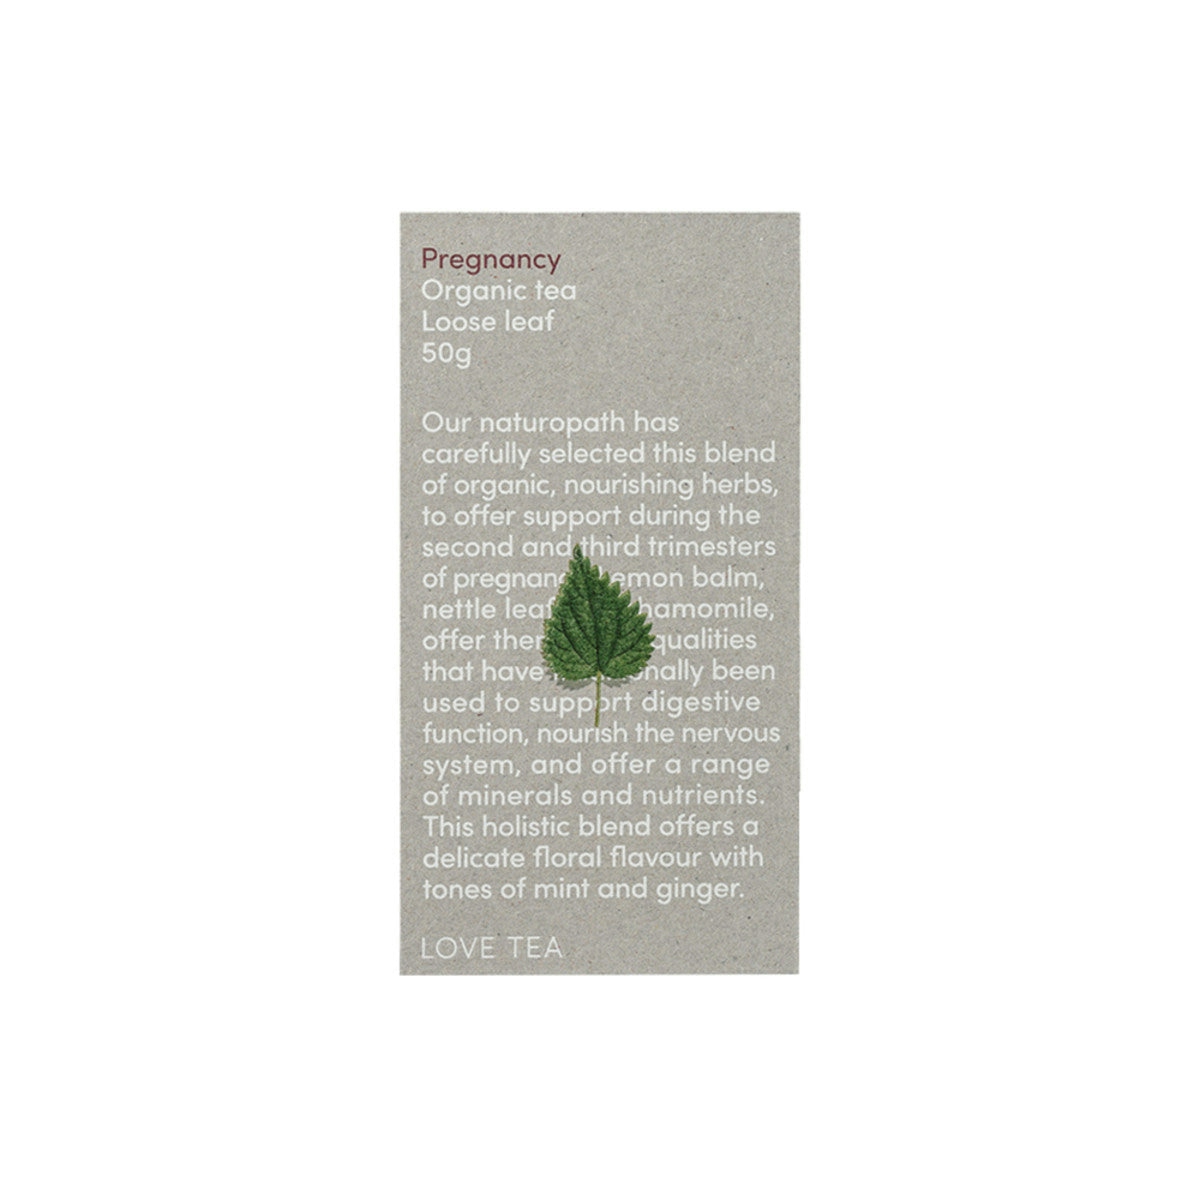 image of Love Tea Organic Pregnancy Tea 50g loose leaf on white background 